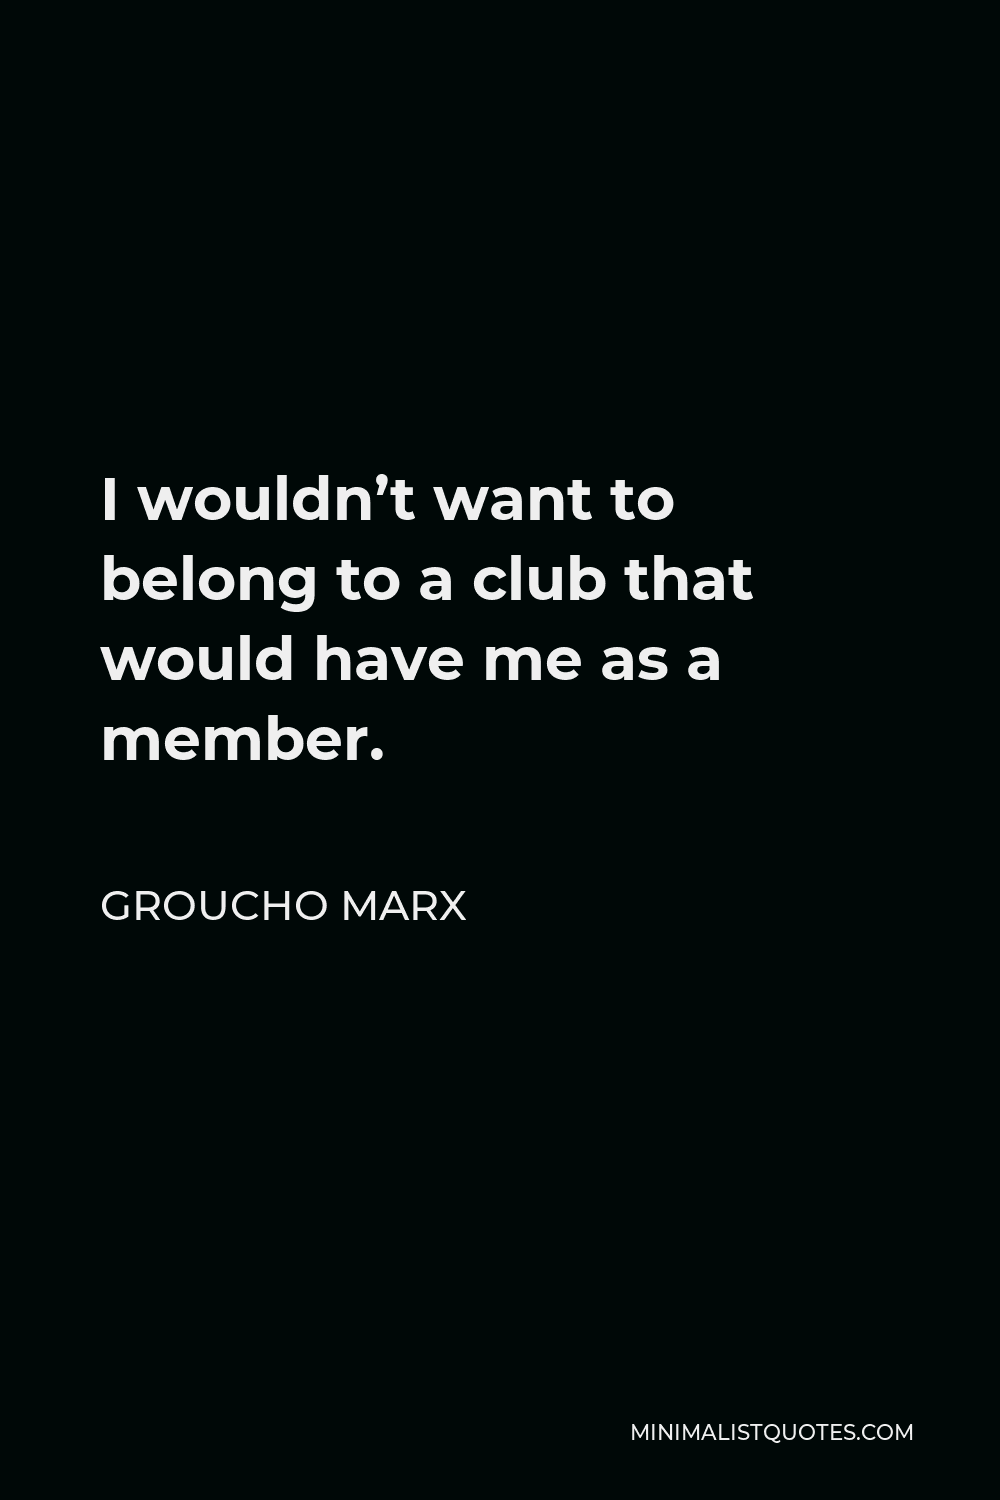 100+ Famous Groucho Marx Quotes | Minimalist Quotes